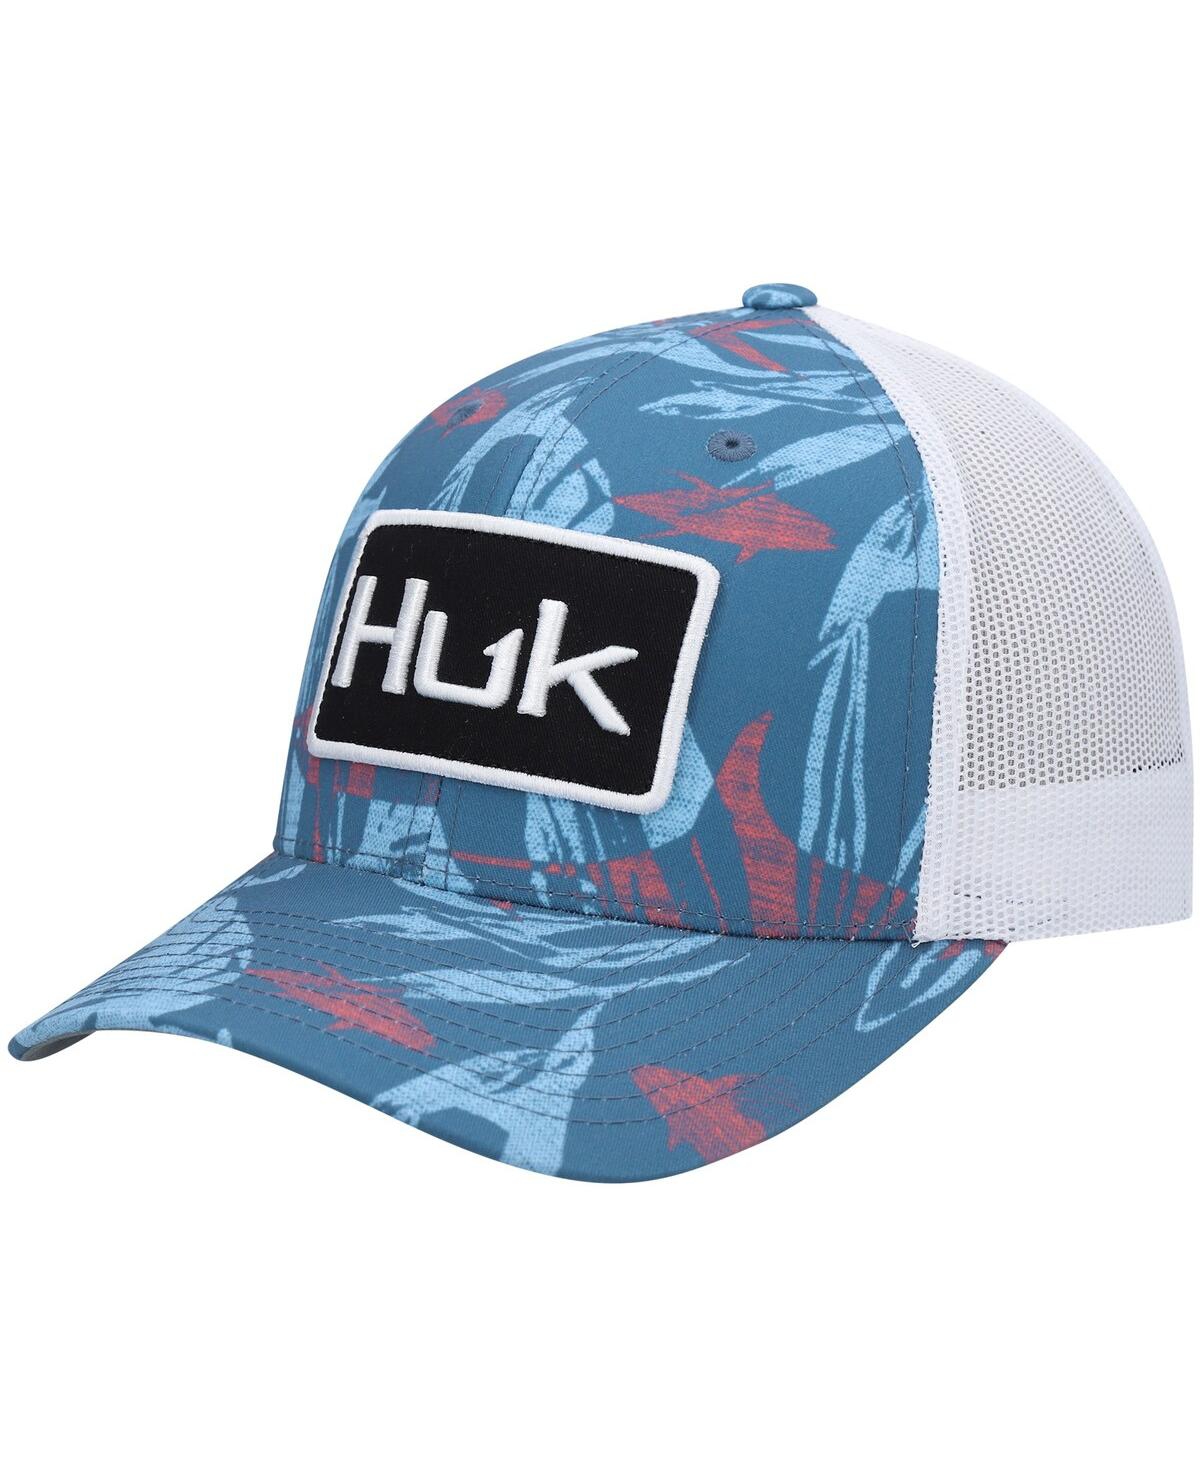 Men's Huk Blue Ocean Palm Trucker Logo Snapback Hat - Blue